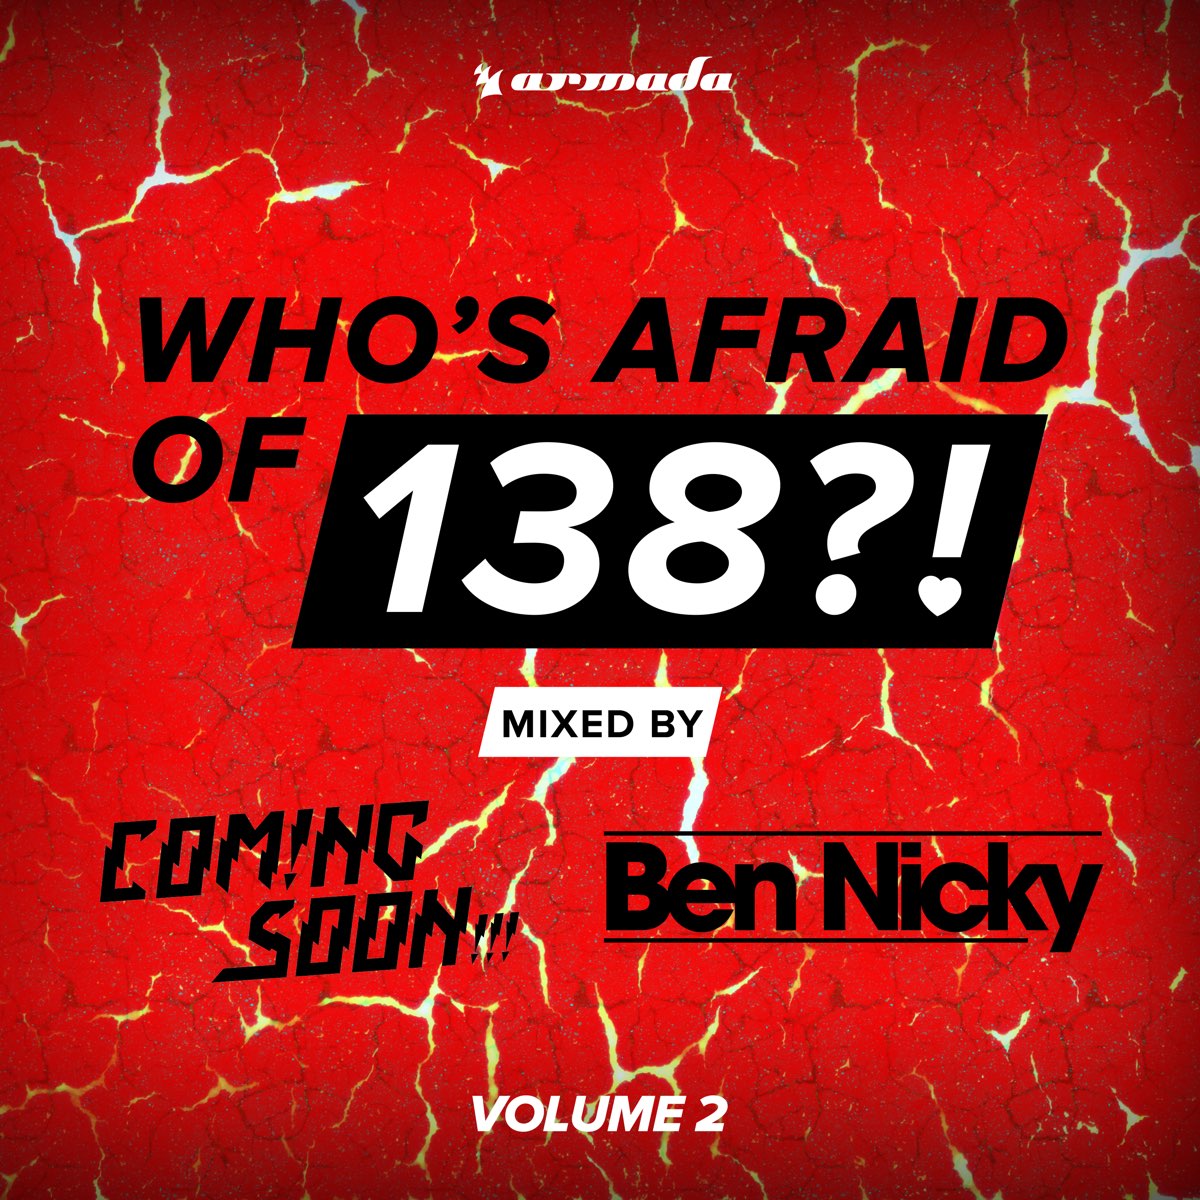 Who's afraid of 138. Alex m.o.r.p.h. feat. Ana criado - Sunset Boulevard (Ben Nicky Remix). Who s afraid песня. Who s afraid of detroit